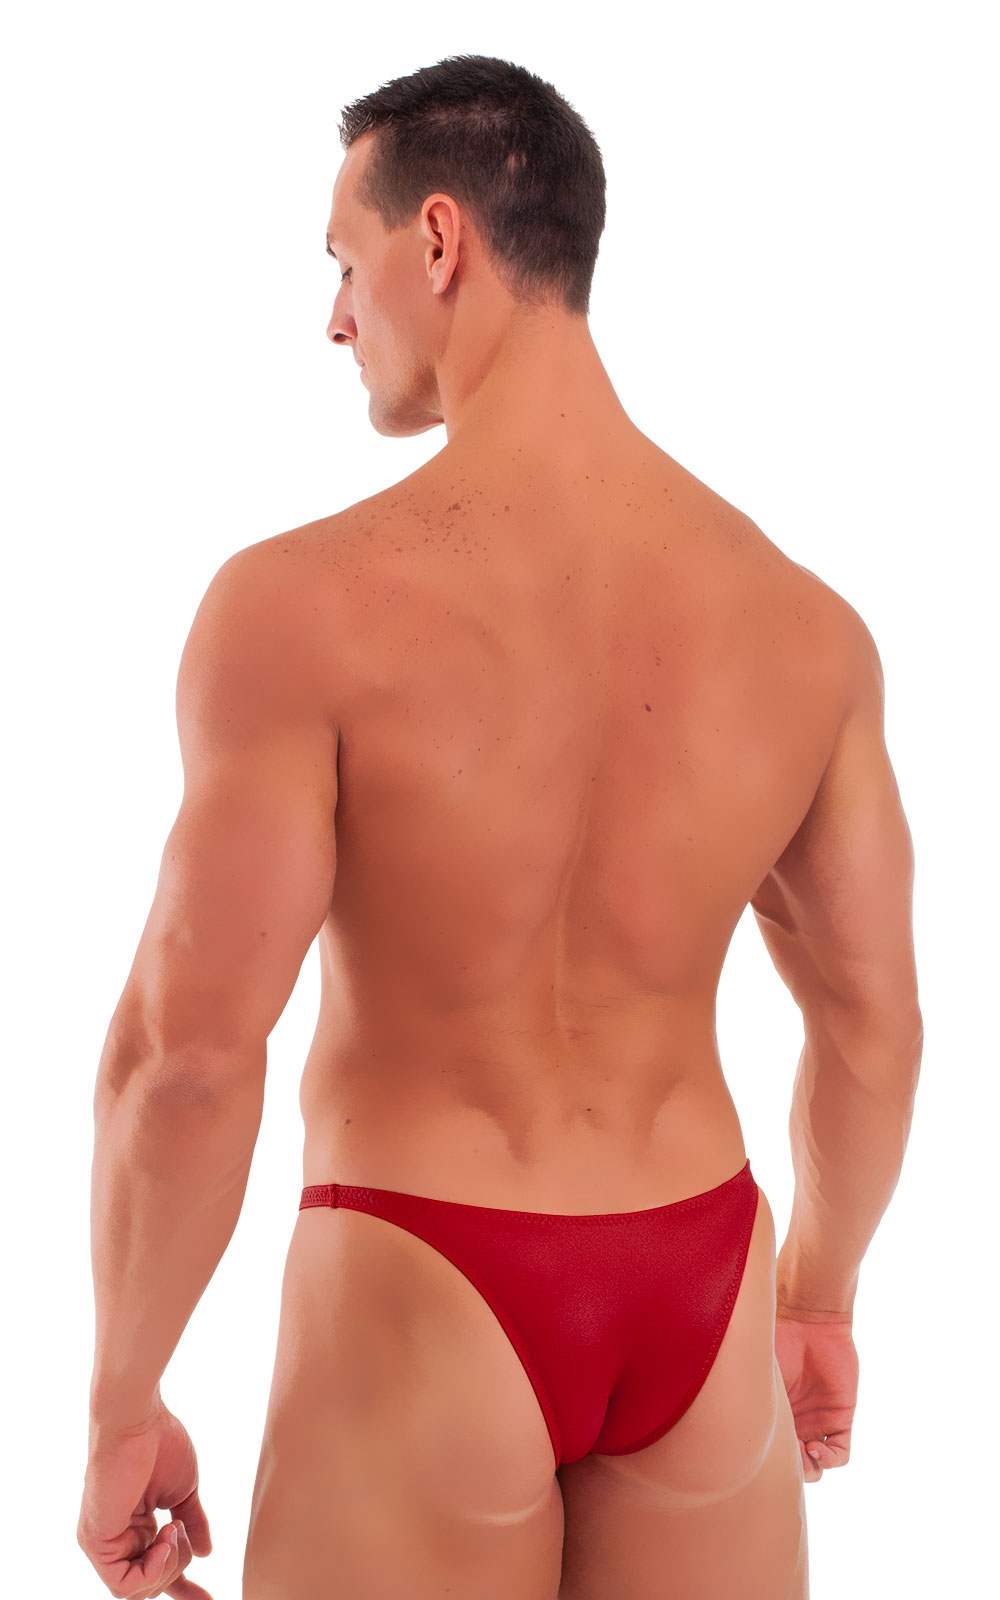 Bodybuilder Posing Suit - Narrow Back in Ruby Red 2